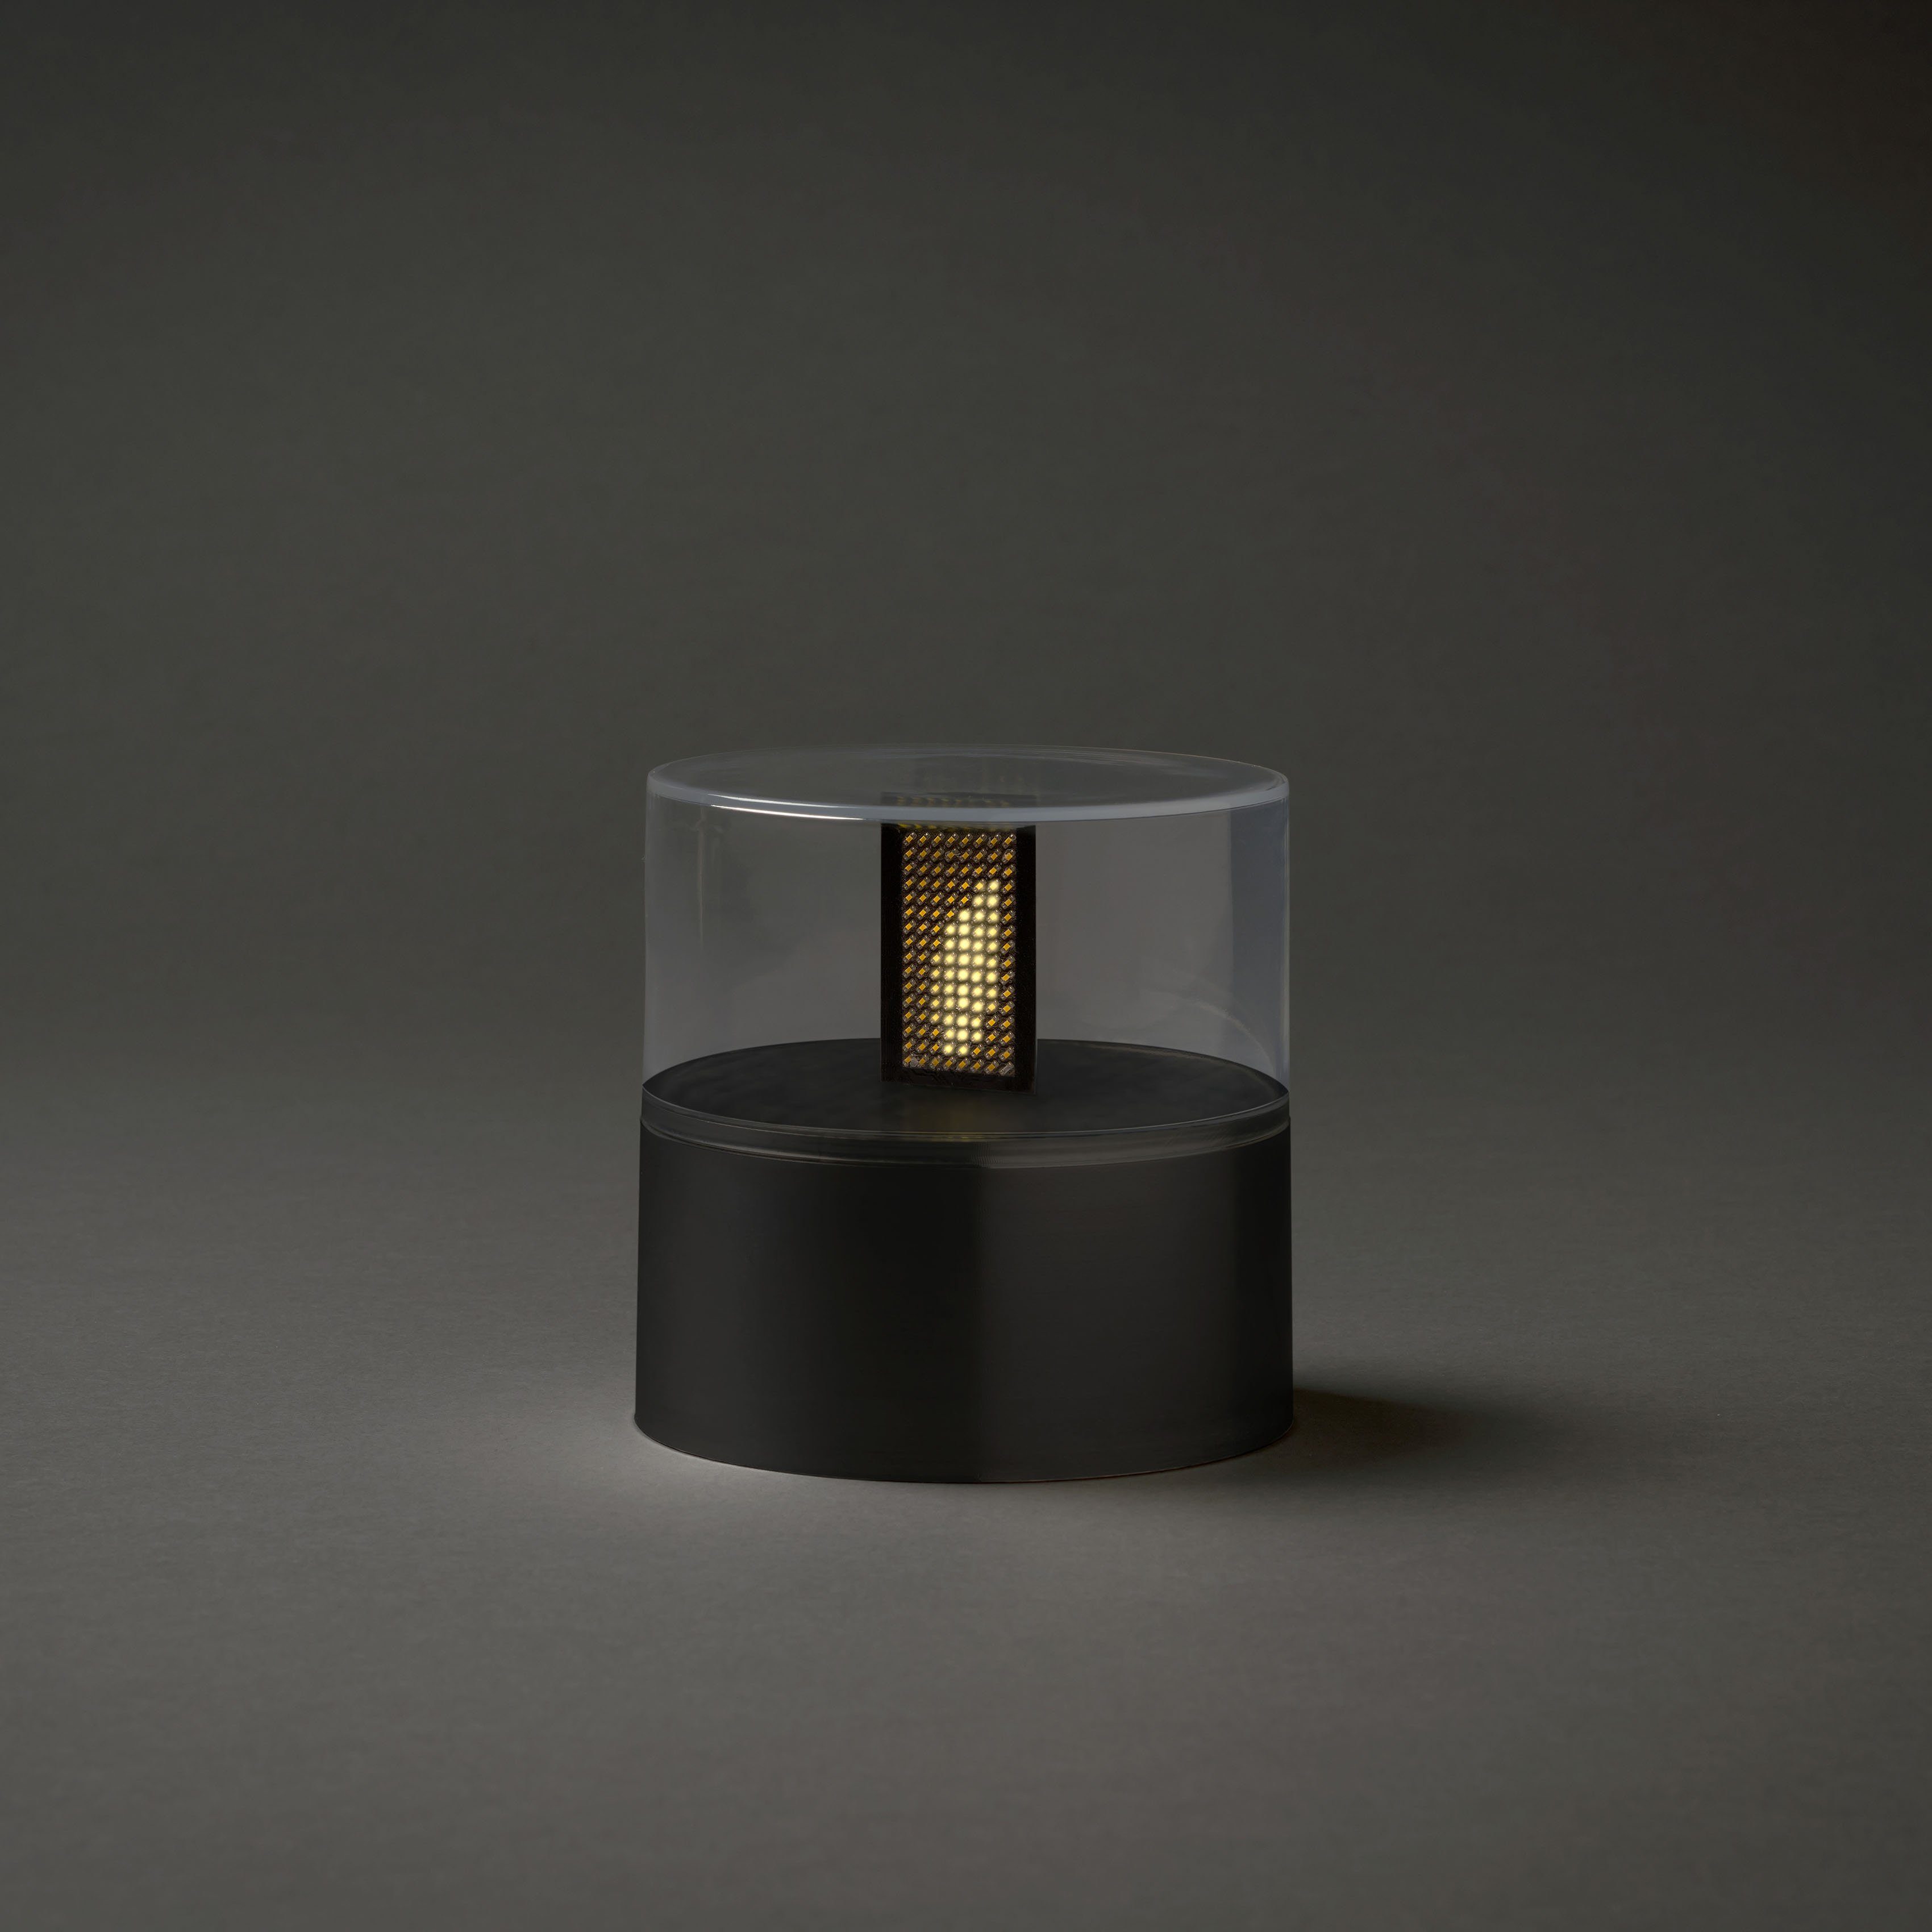 KONSTSMIDE LED Dekolicht, LED fest Kunststoffsockel integriert, Warmweiß, transparenter Abdeckung Flamme mit LED und schwarzem